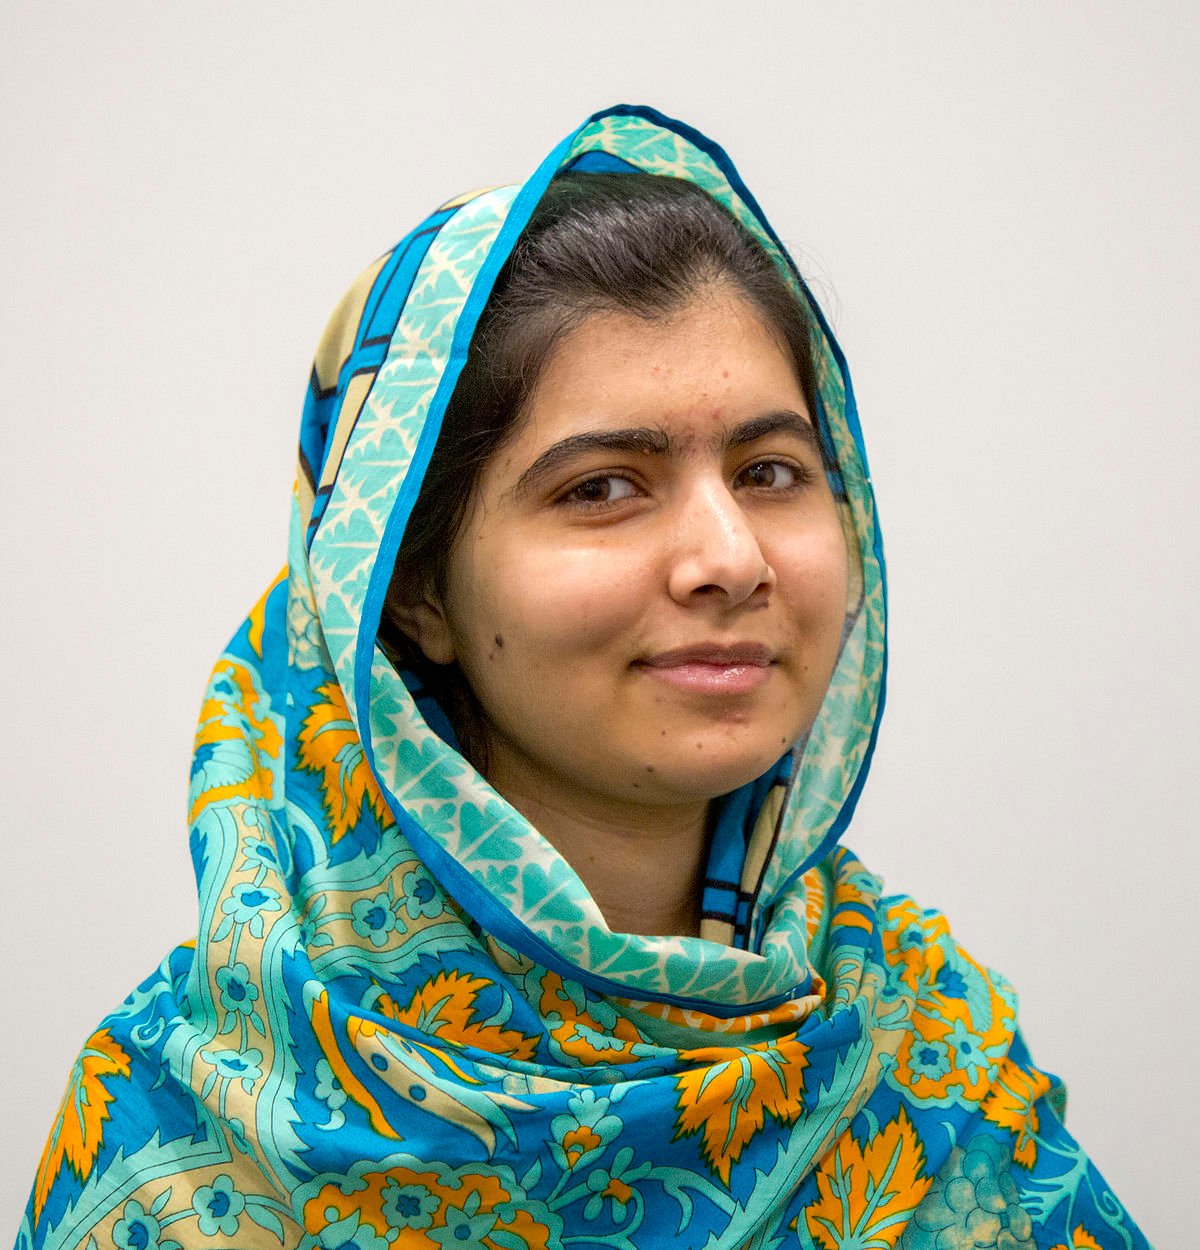 An image of Malala Yousafzai